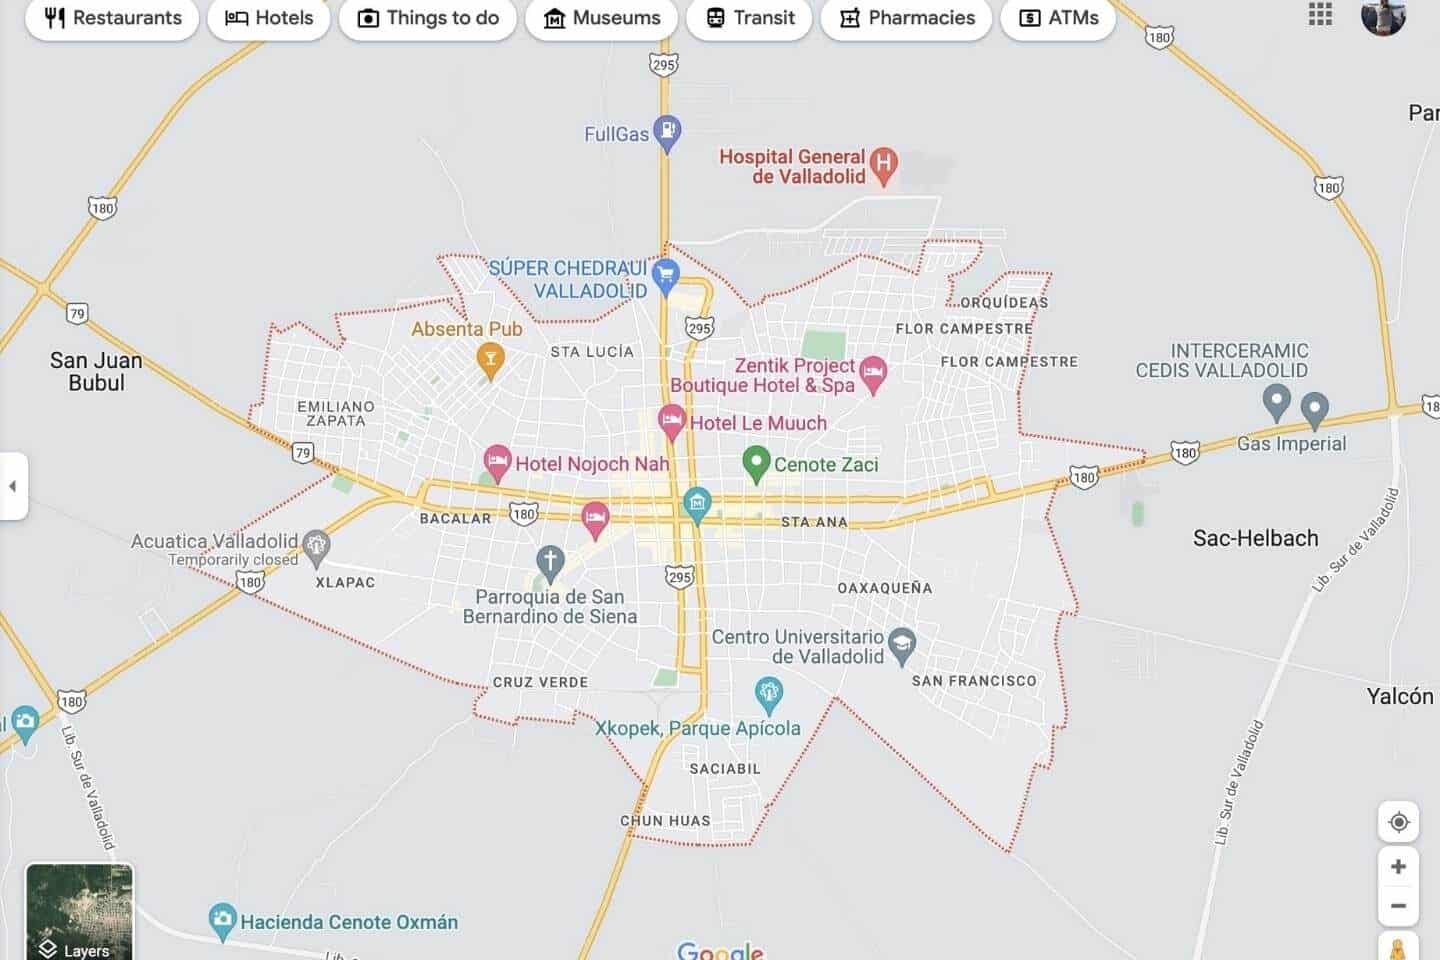 Map of Valladolid via Google Maps